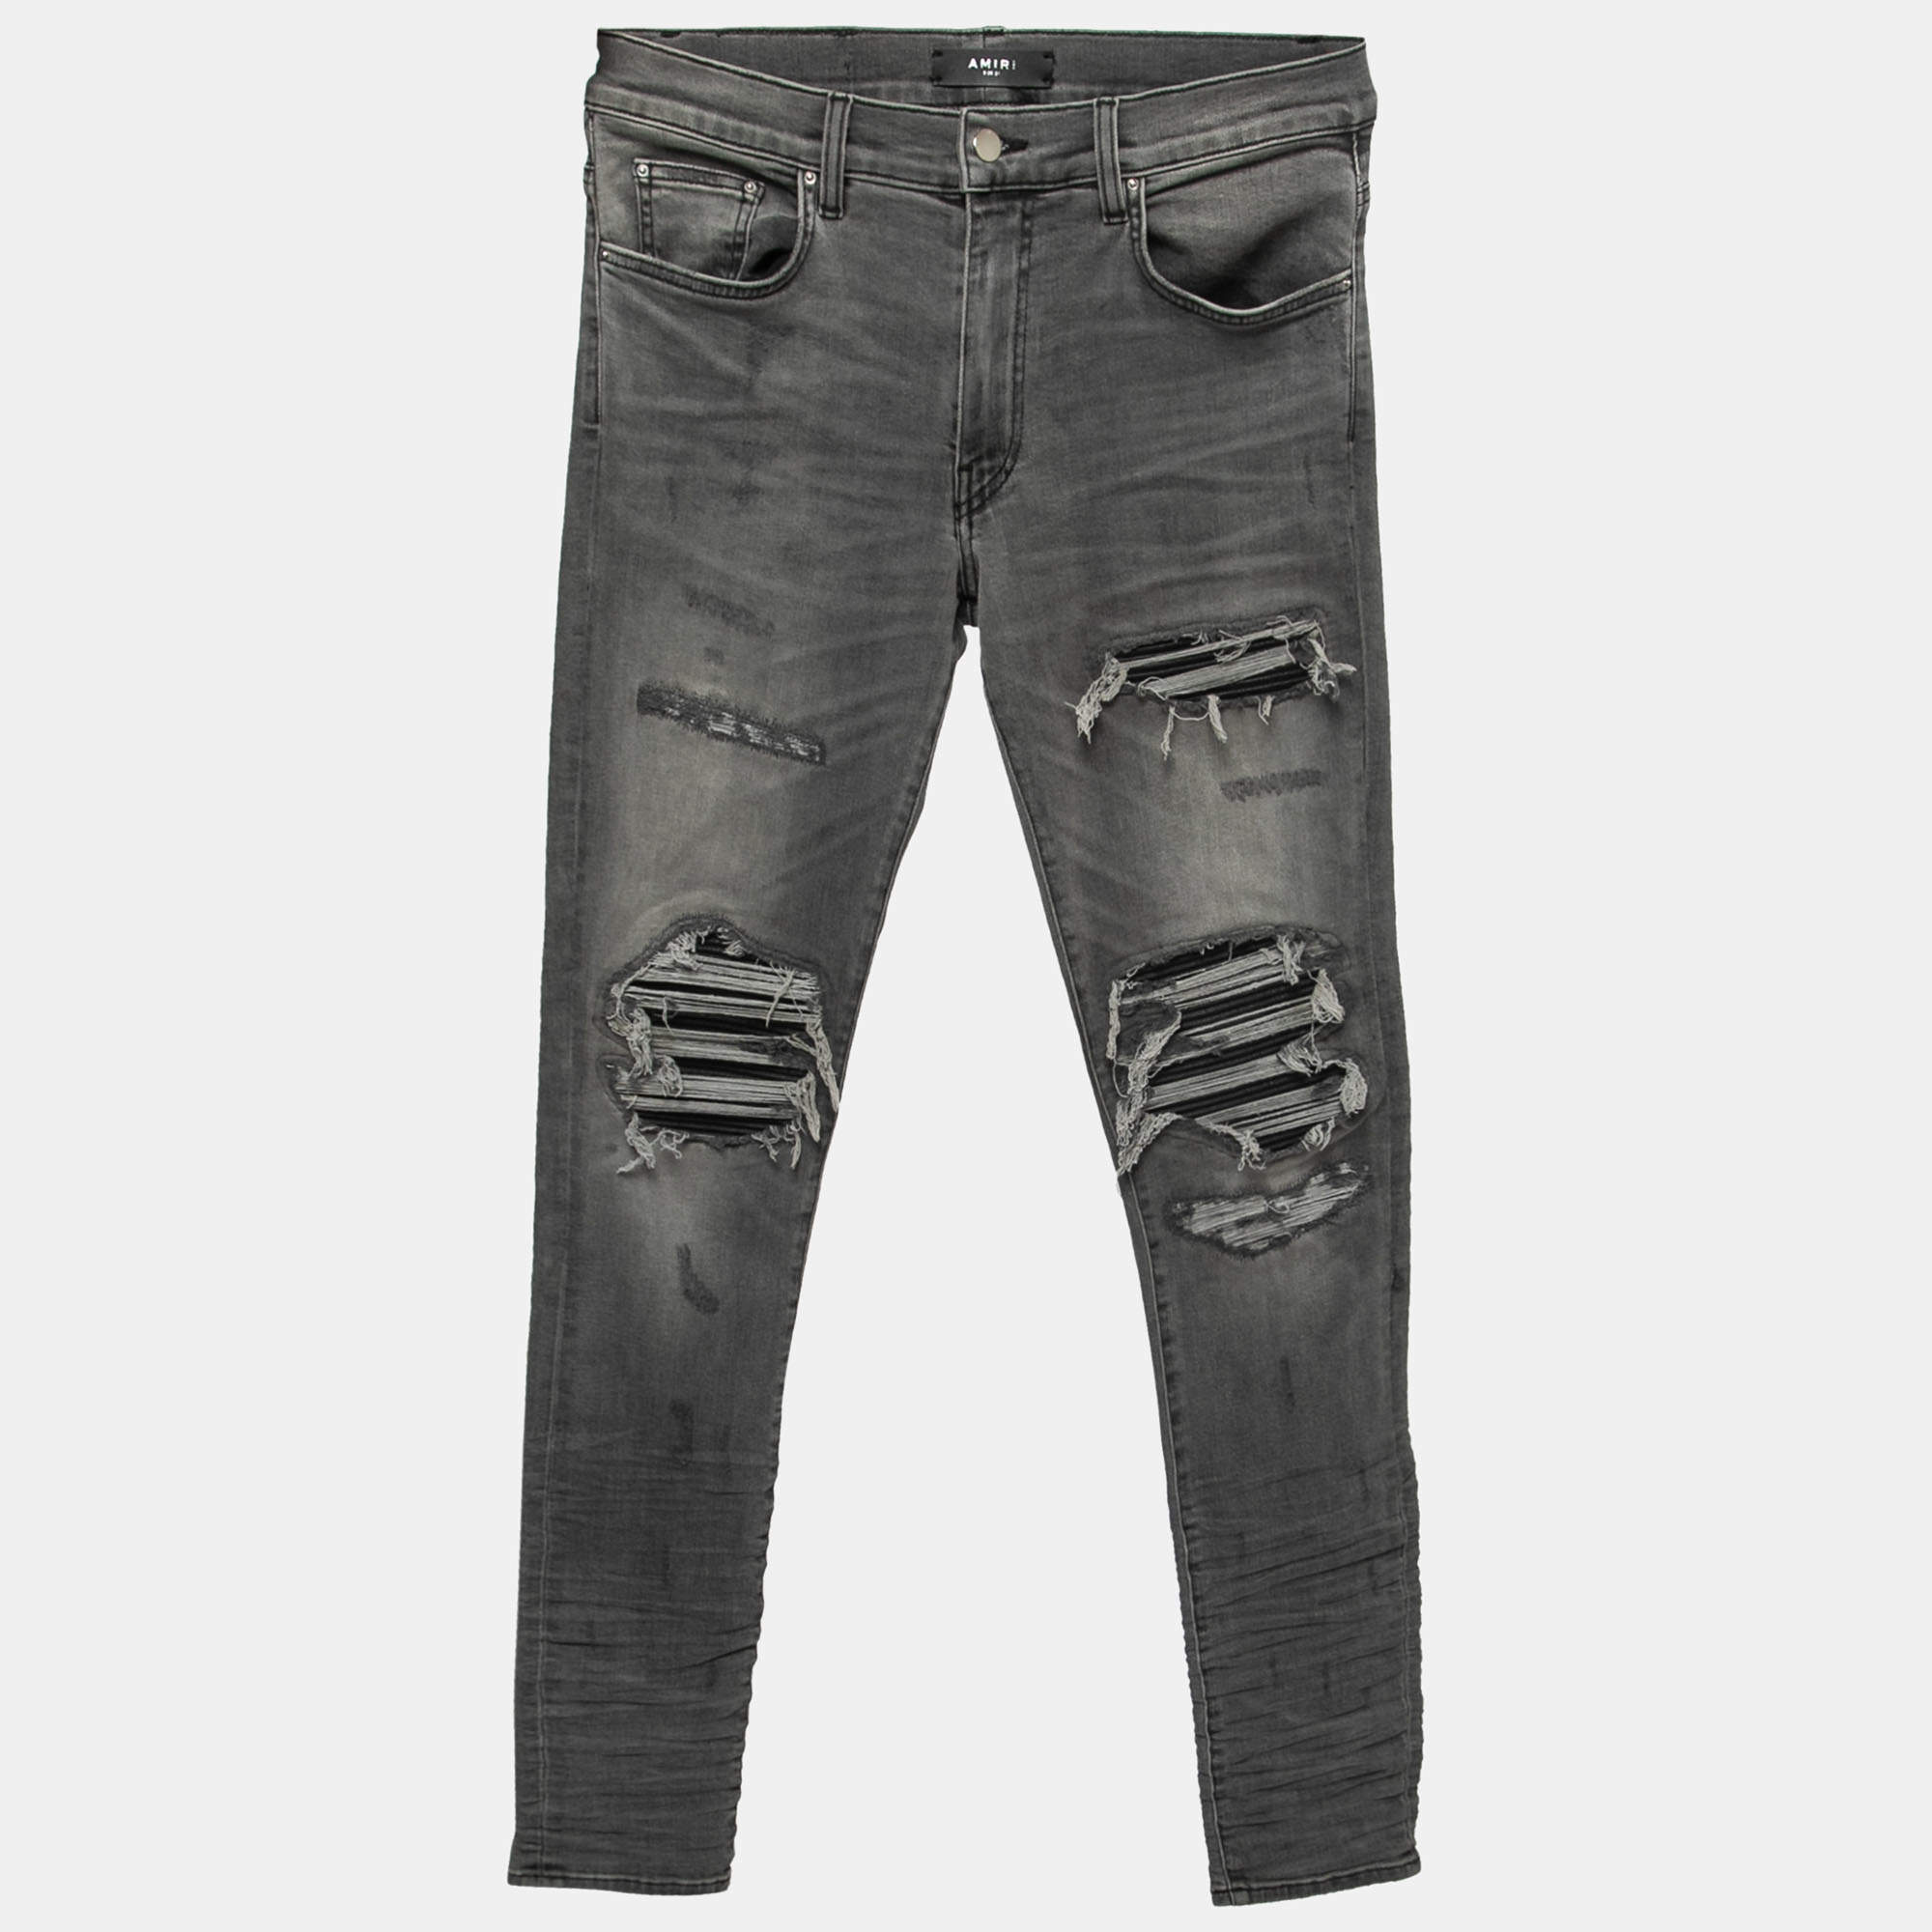 Amiri Grey Distressed Denim Skinny Jeans M Waist 31"